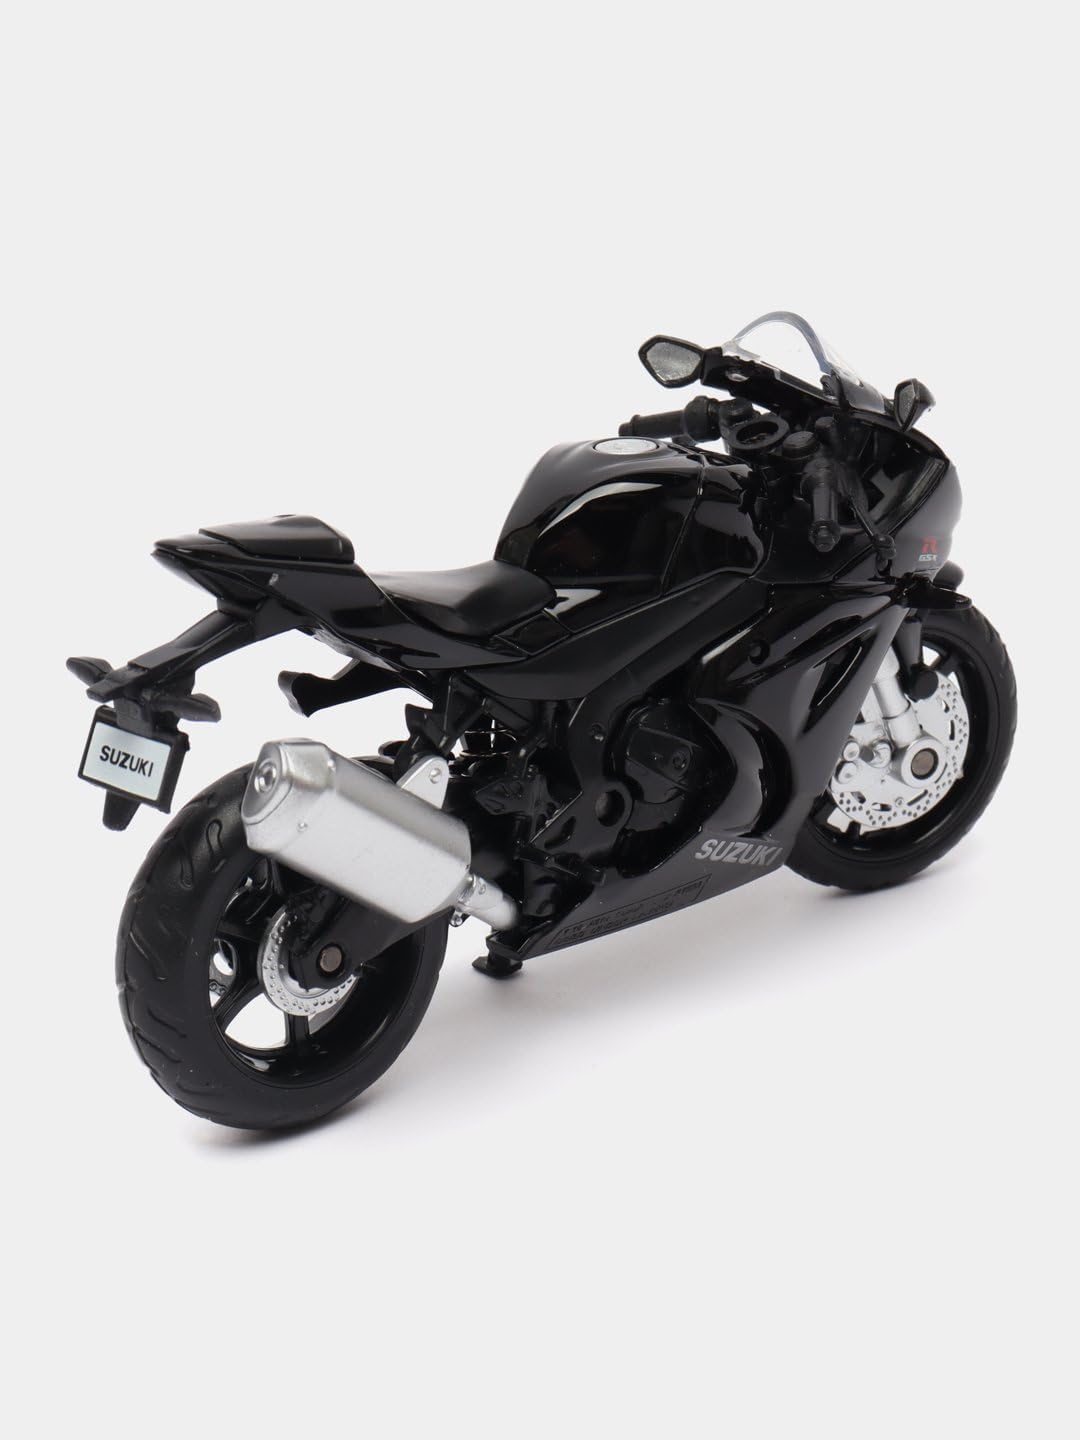 MSZ Suzuki GSX-R1000 Bike 1:18 Die-Cast Replica - Black - Laadlee